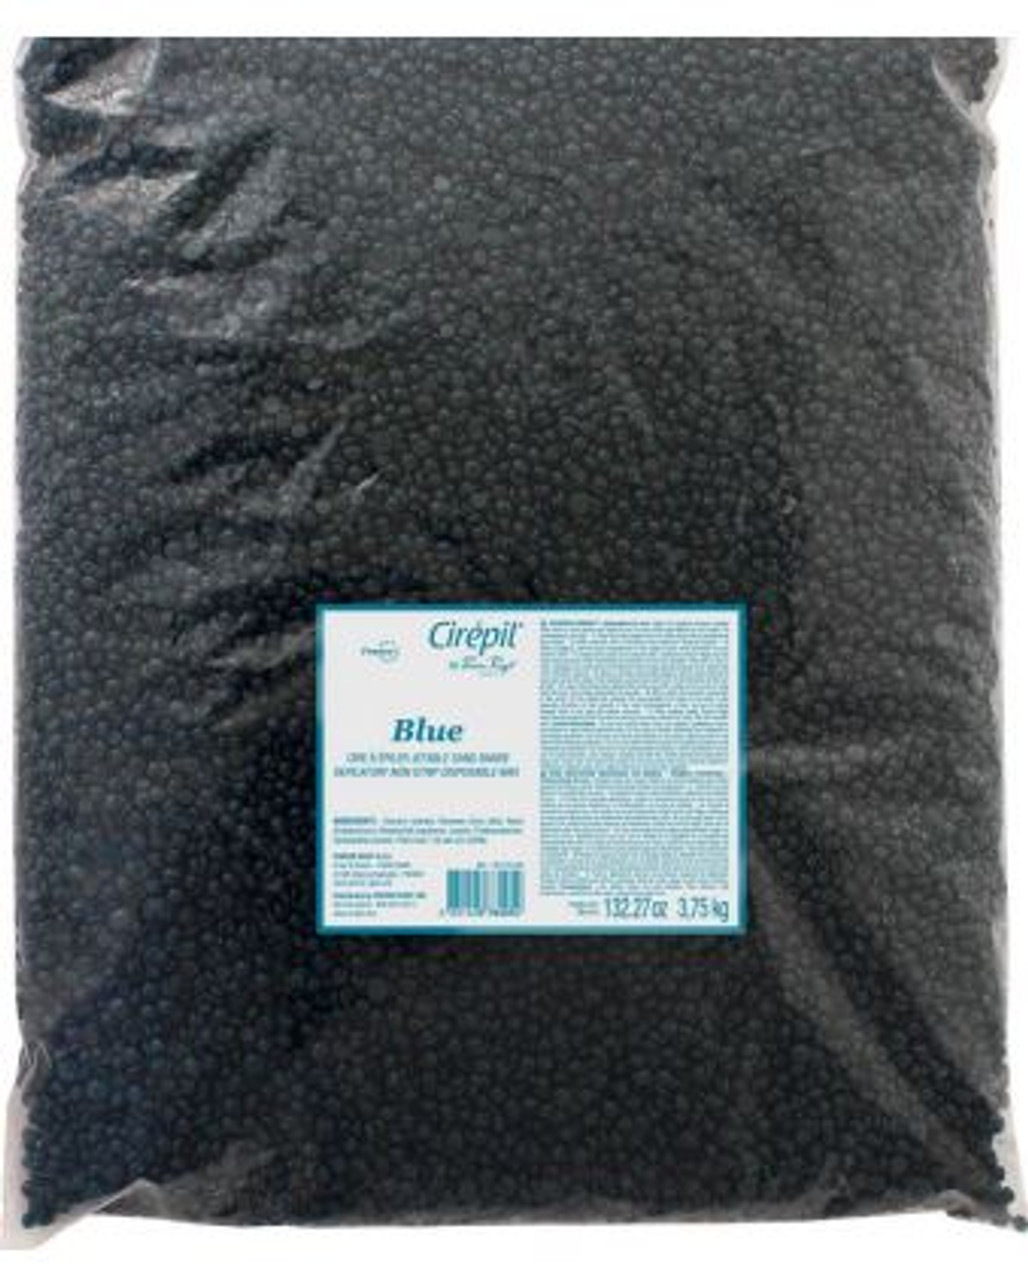 Cirepil Blue Hard Wax Beads Bulk 8.3 lb